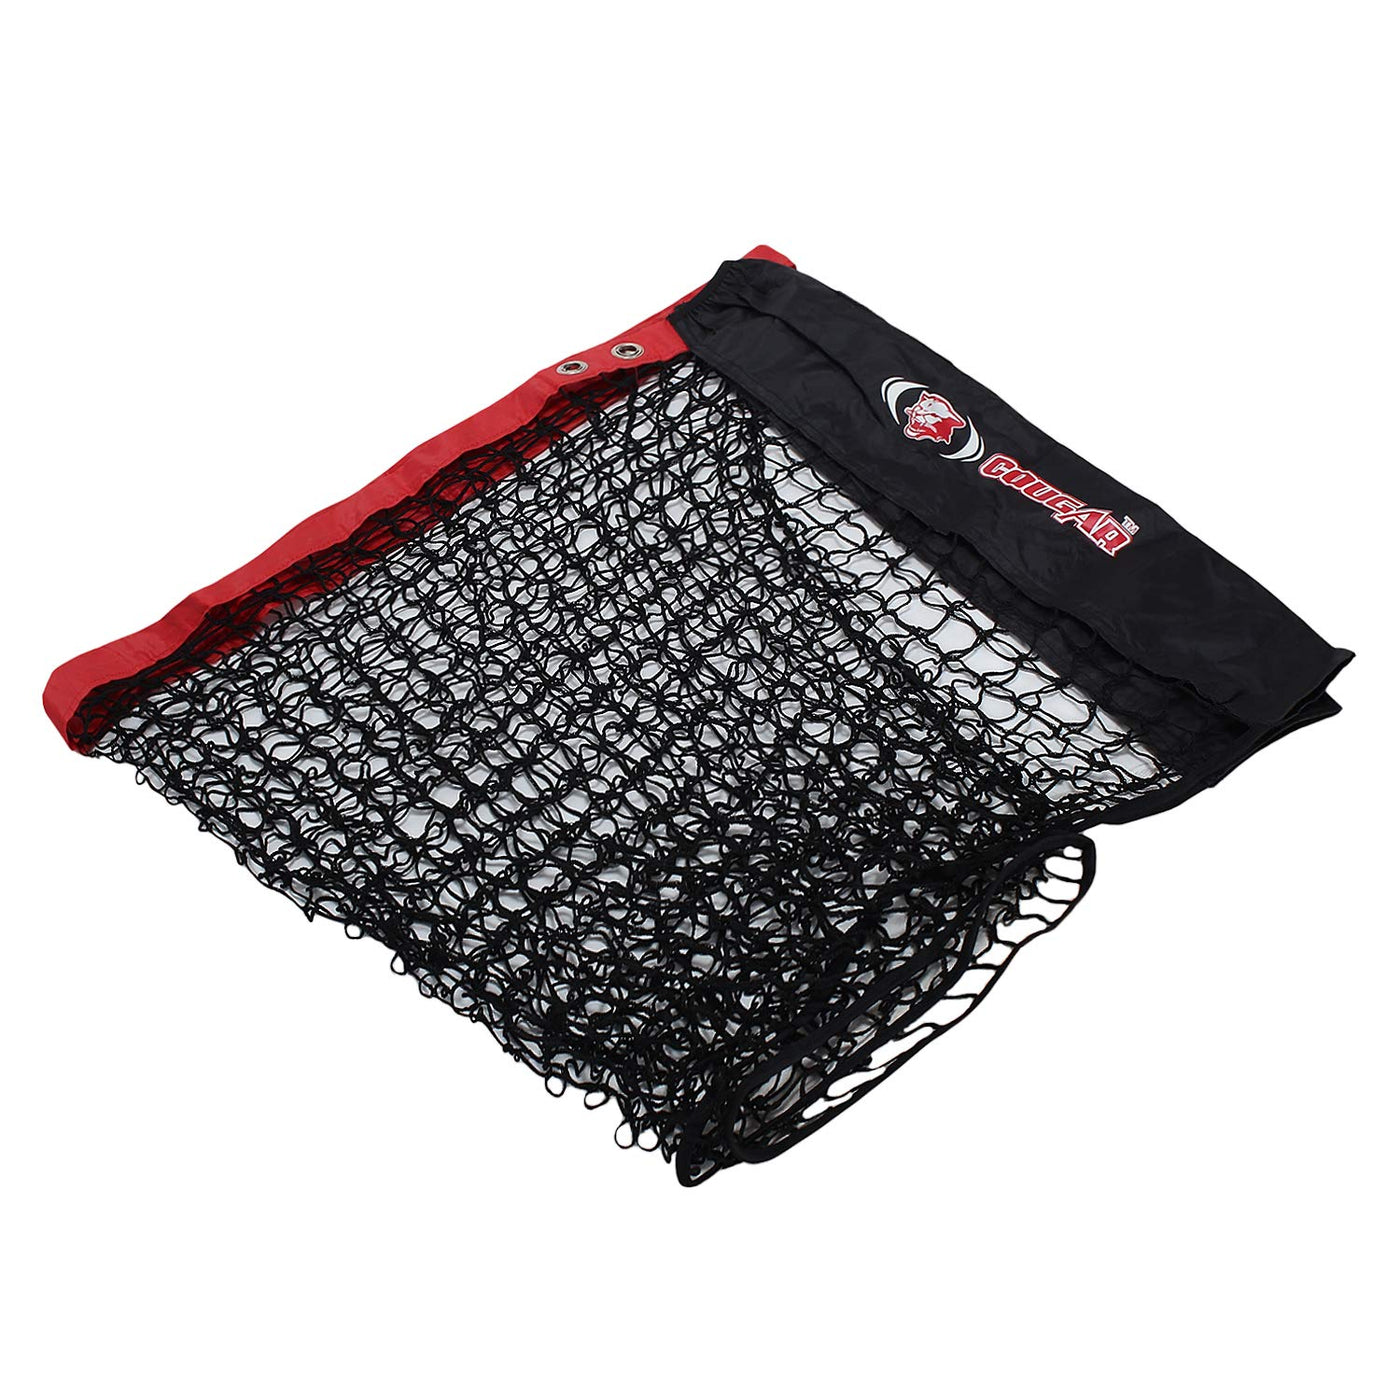 Cougar Portable Badminton Net Set with Bag TB-007